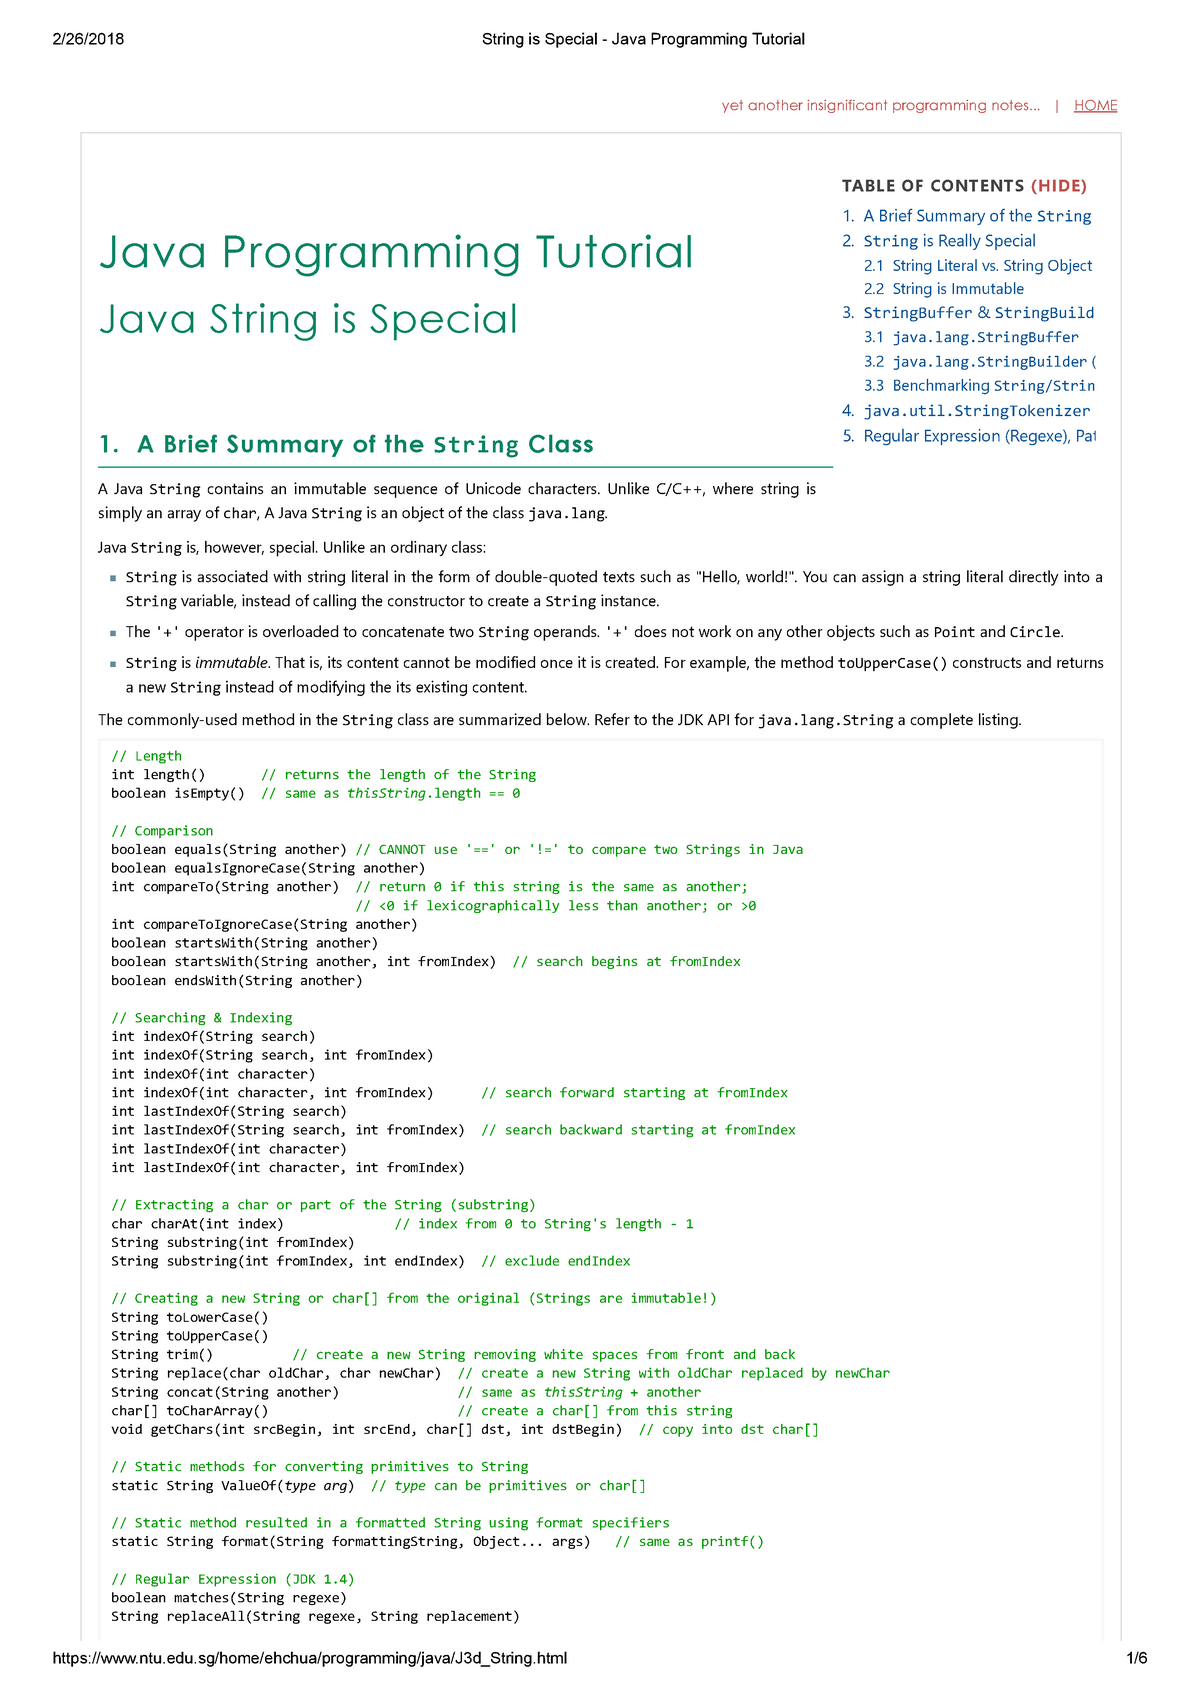 Java substring